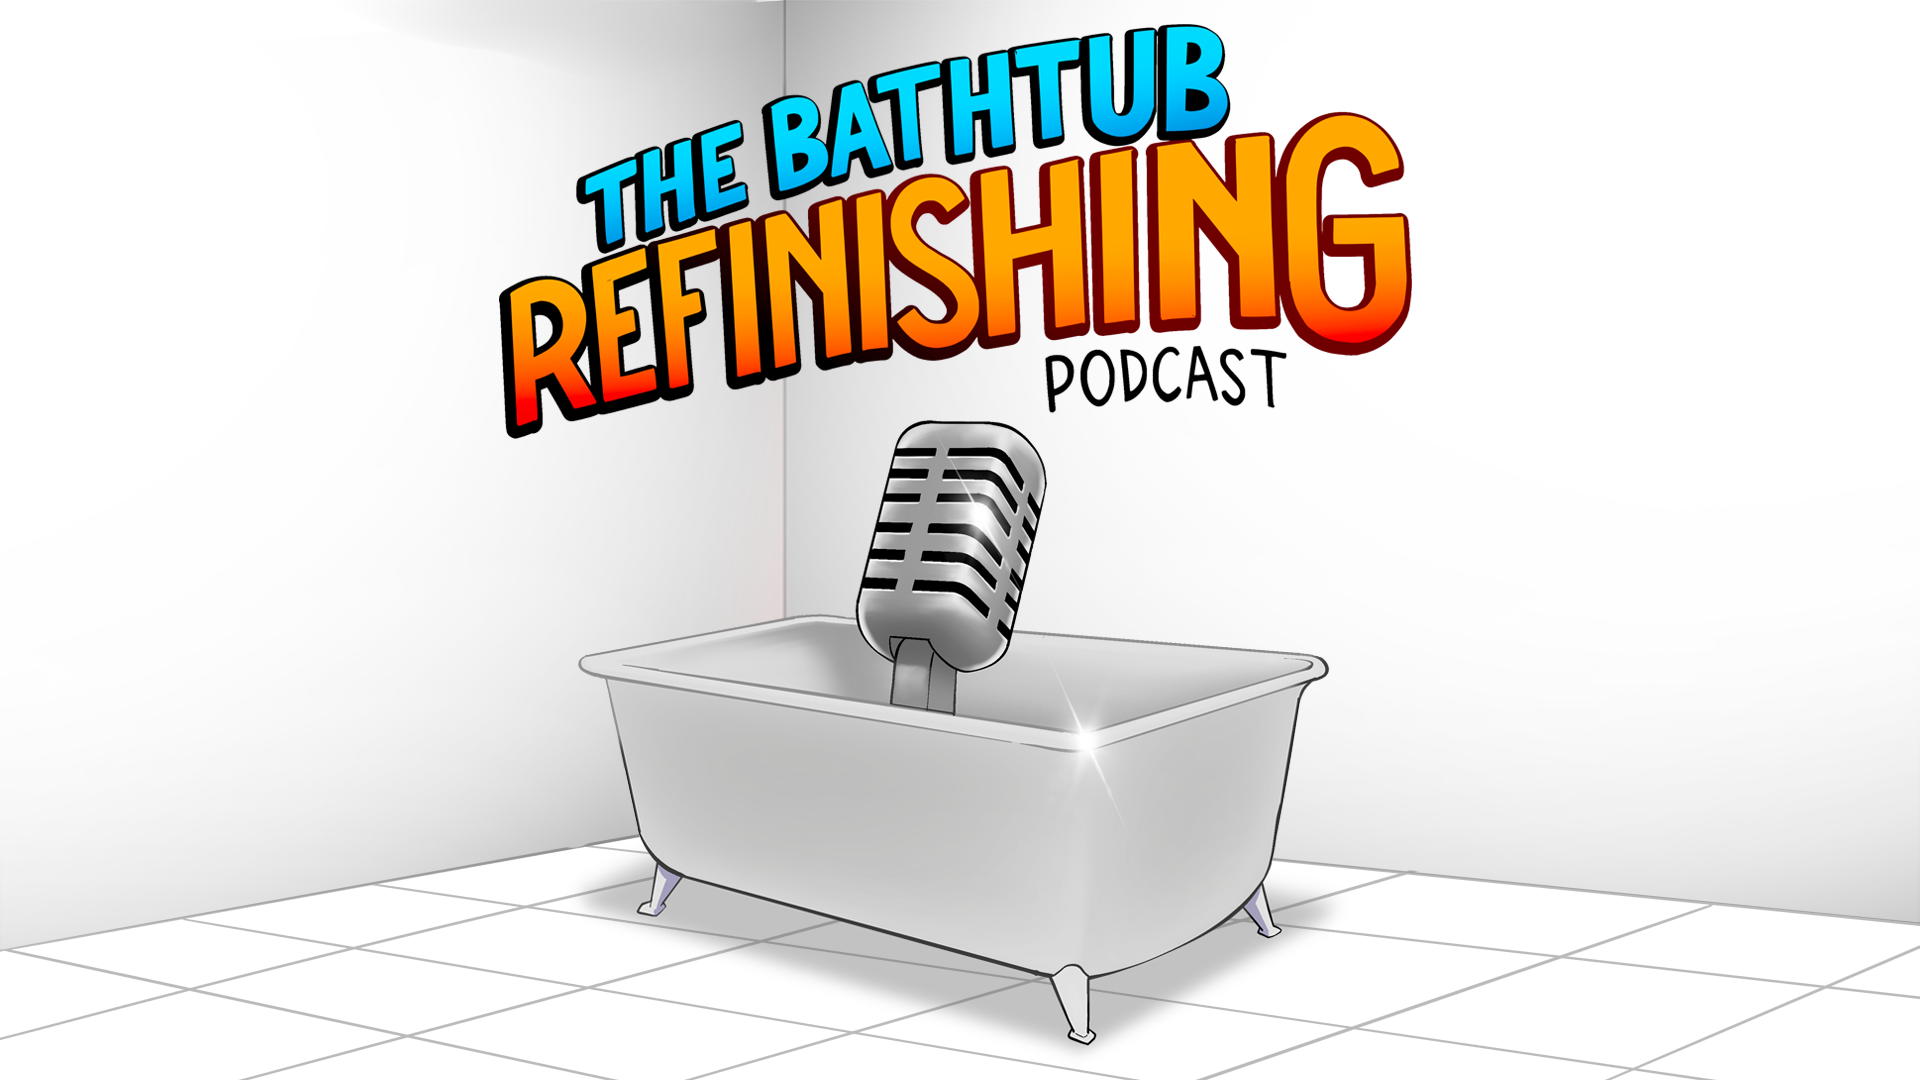 The Bathtub Refinishing Podcast